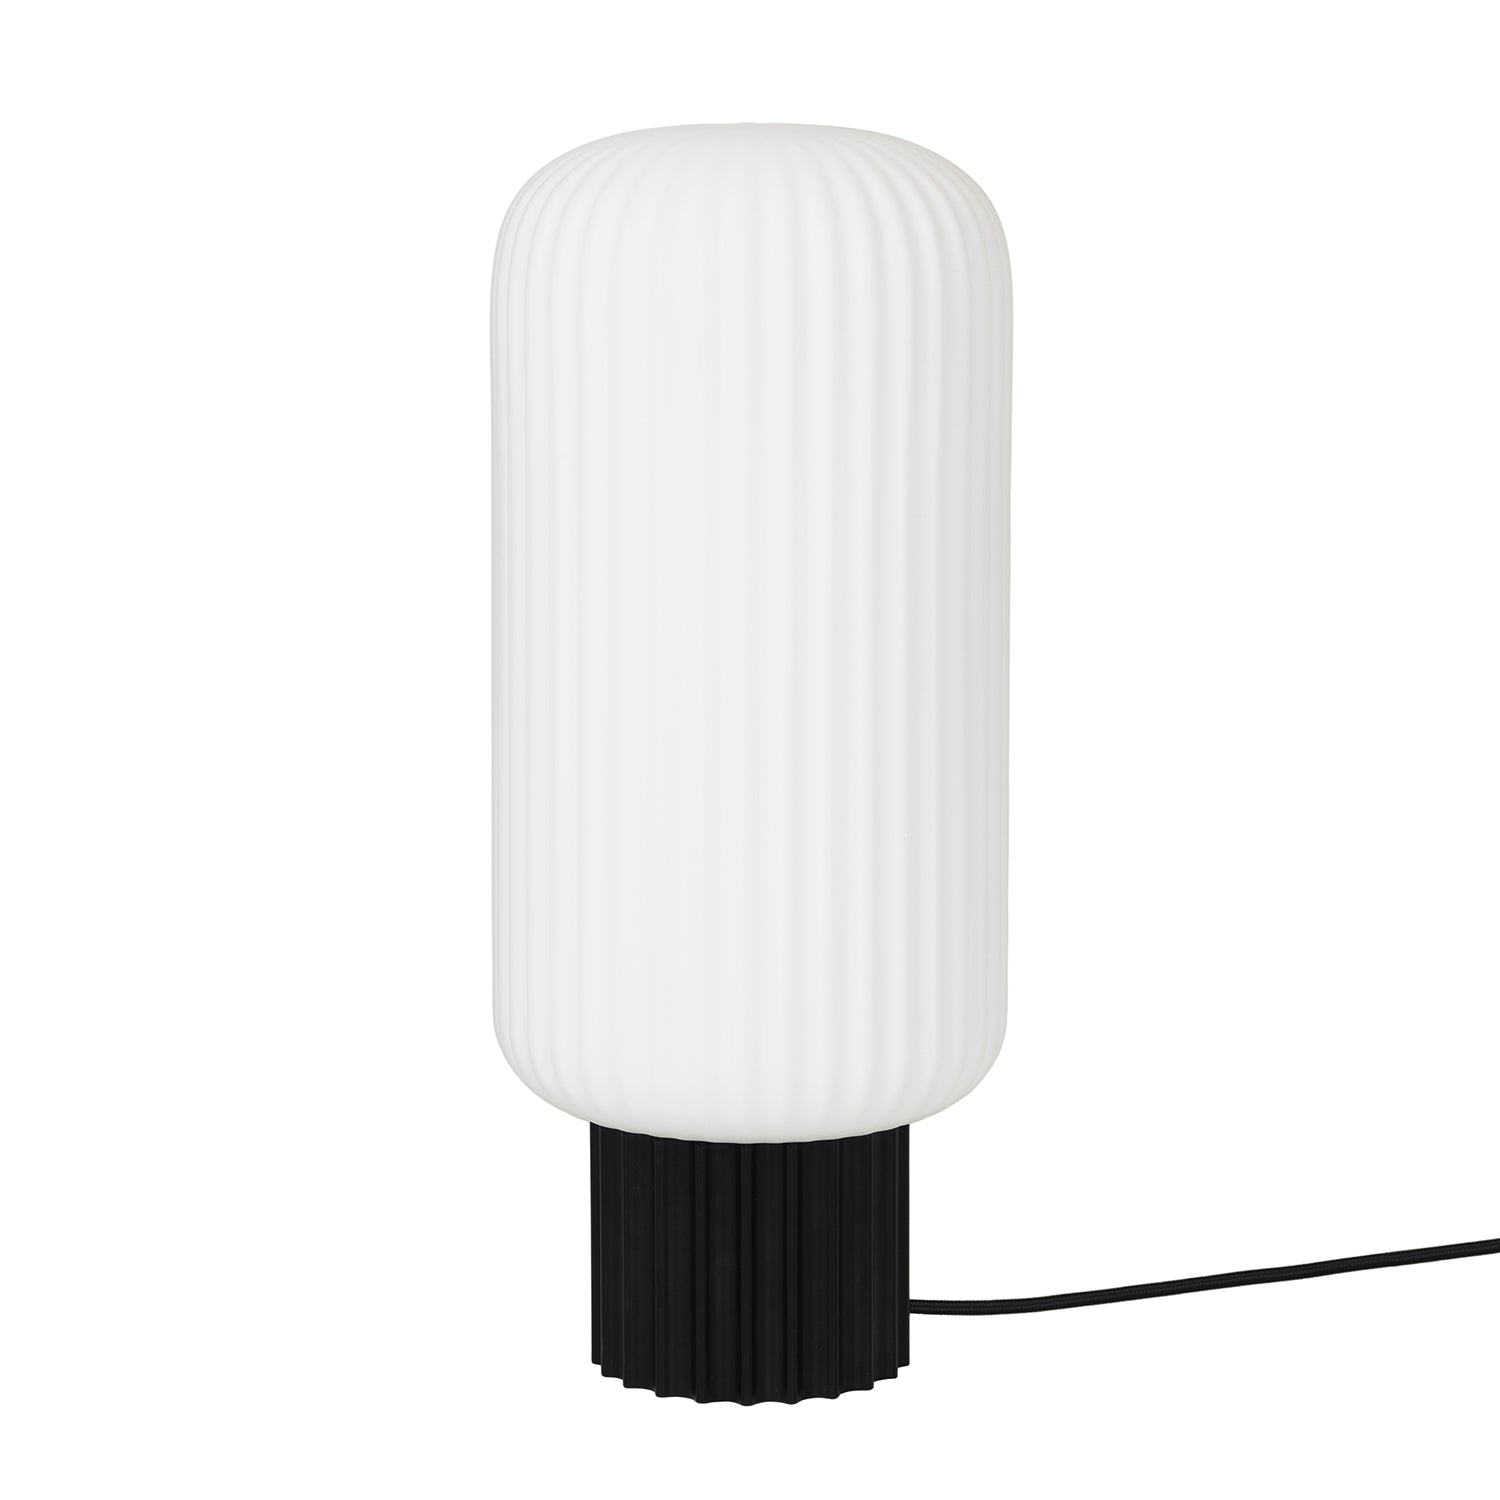 Lolly Table Lamp - The Design Choice